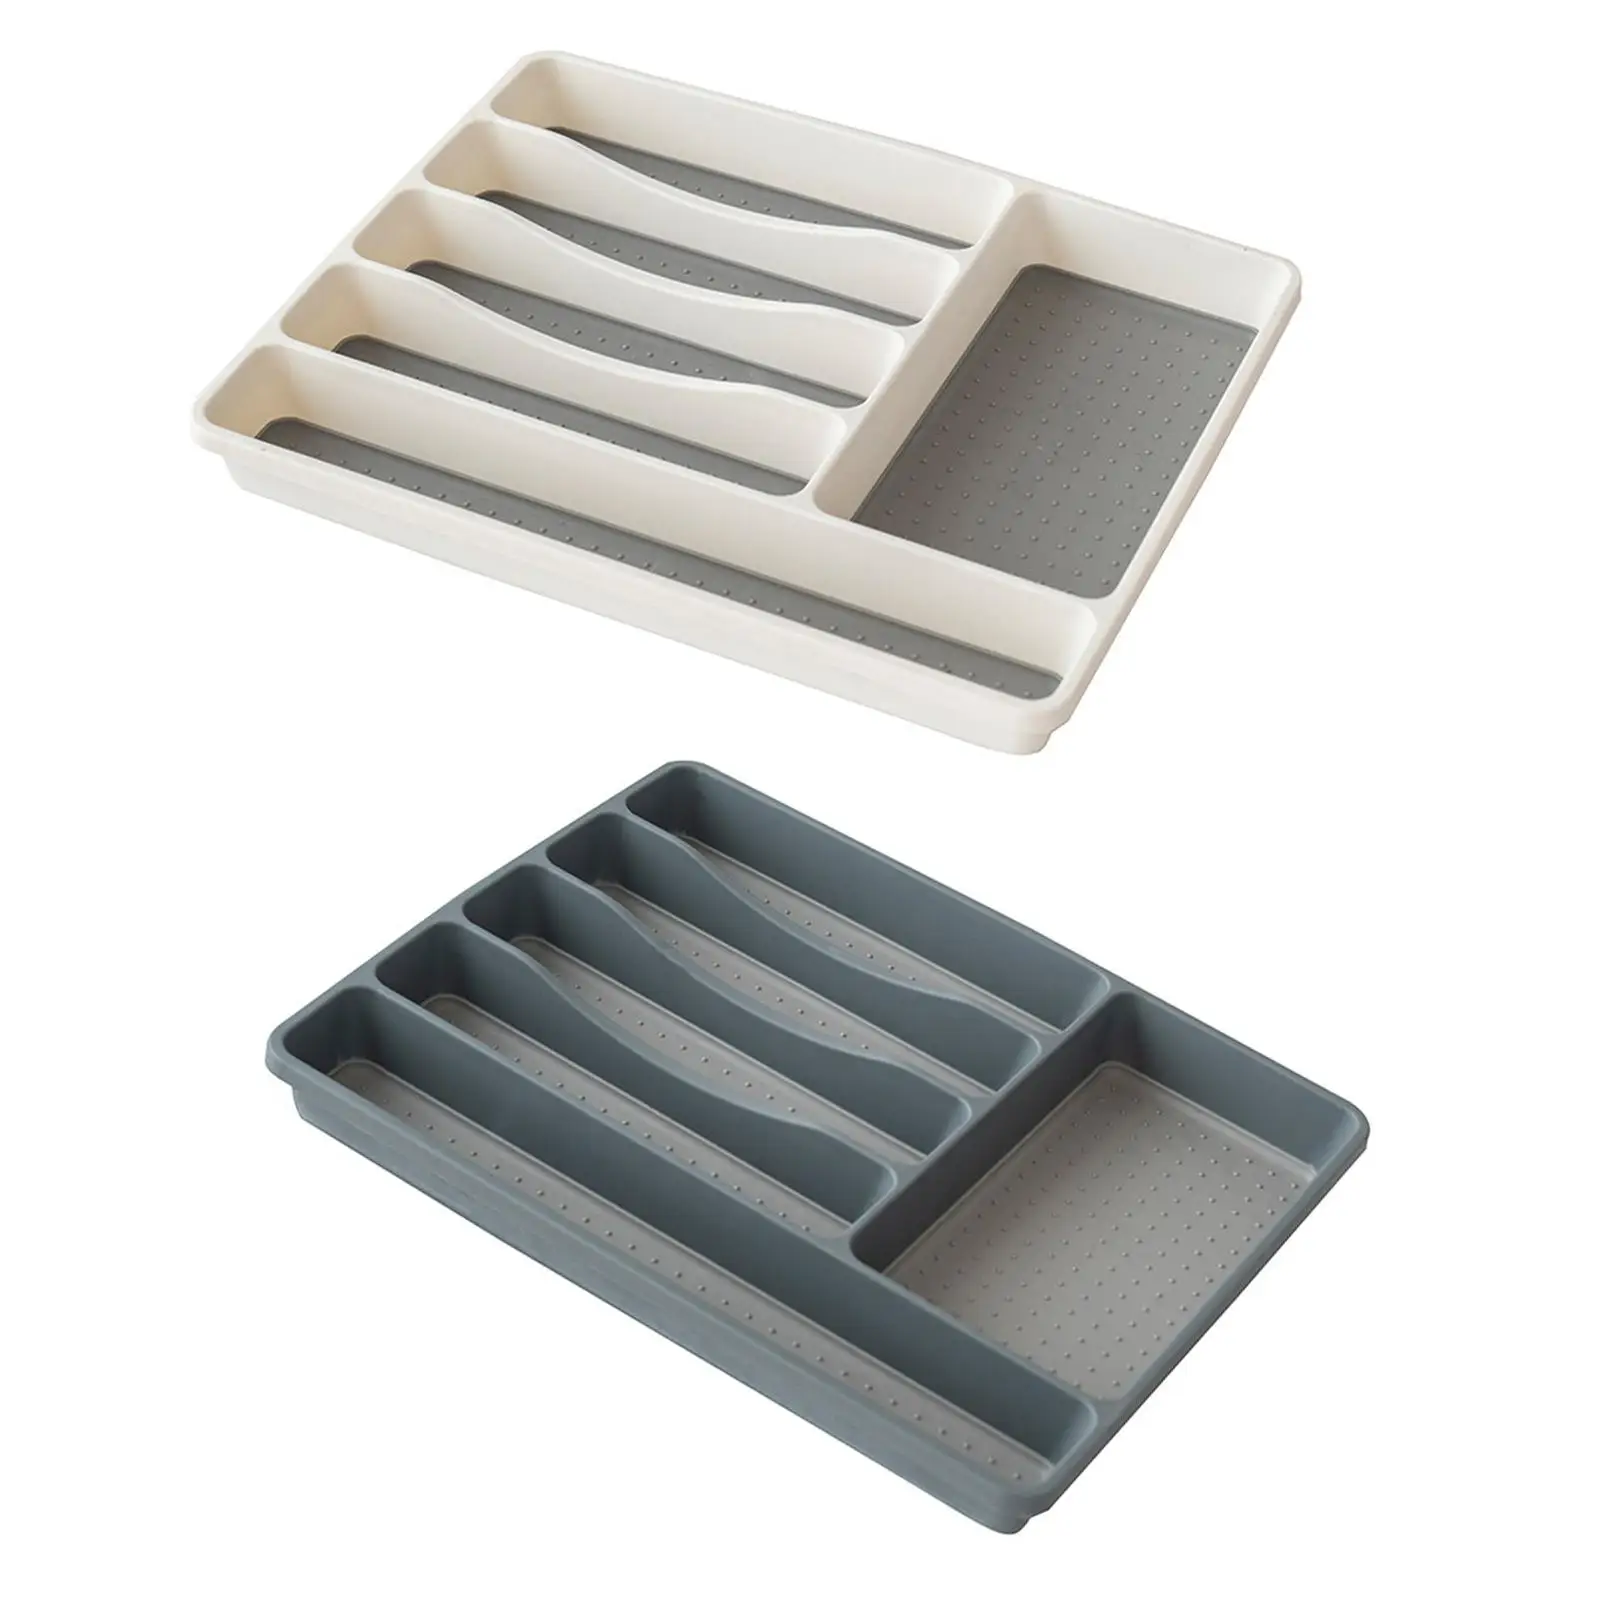 Cutlery Storage Tray Kitchen Gadgets Drawer Organizer Racks for Fork